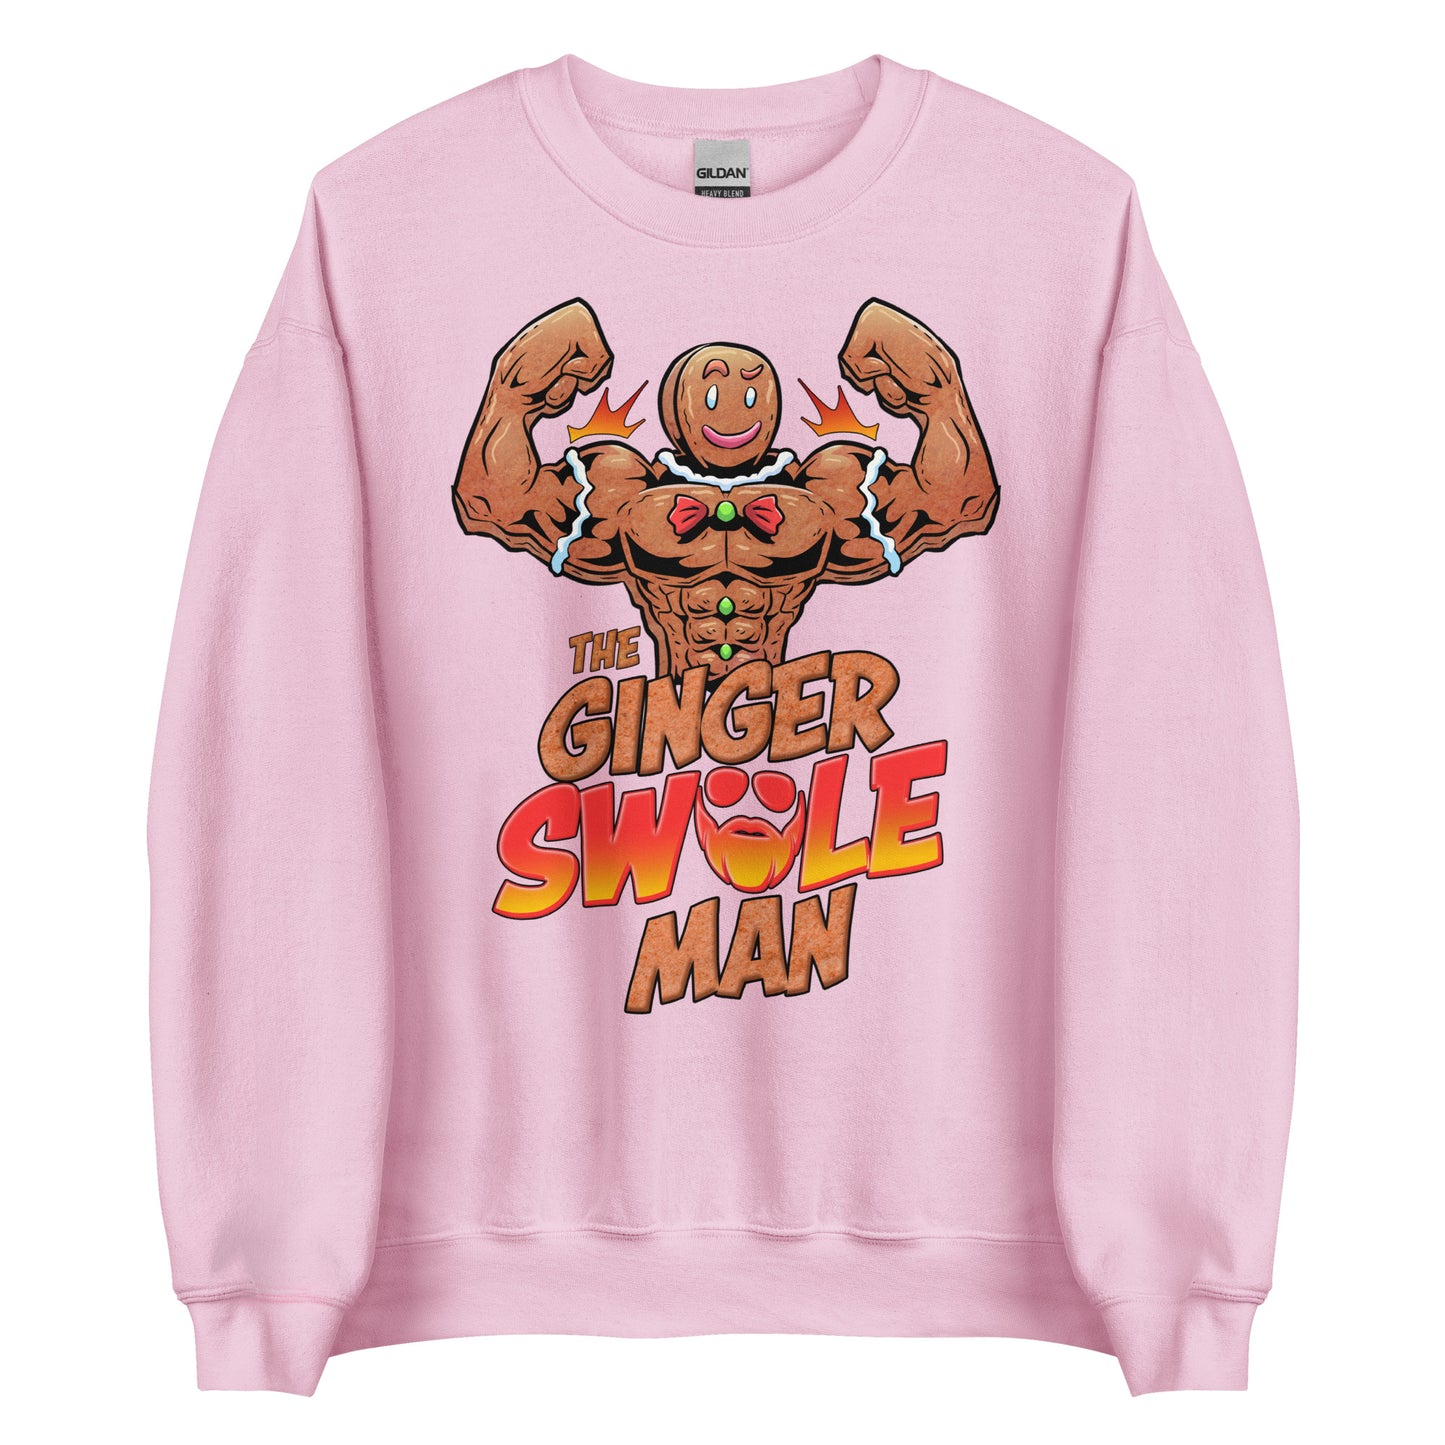 The Ginger Swole Man Sweatshirt